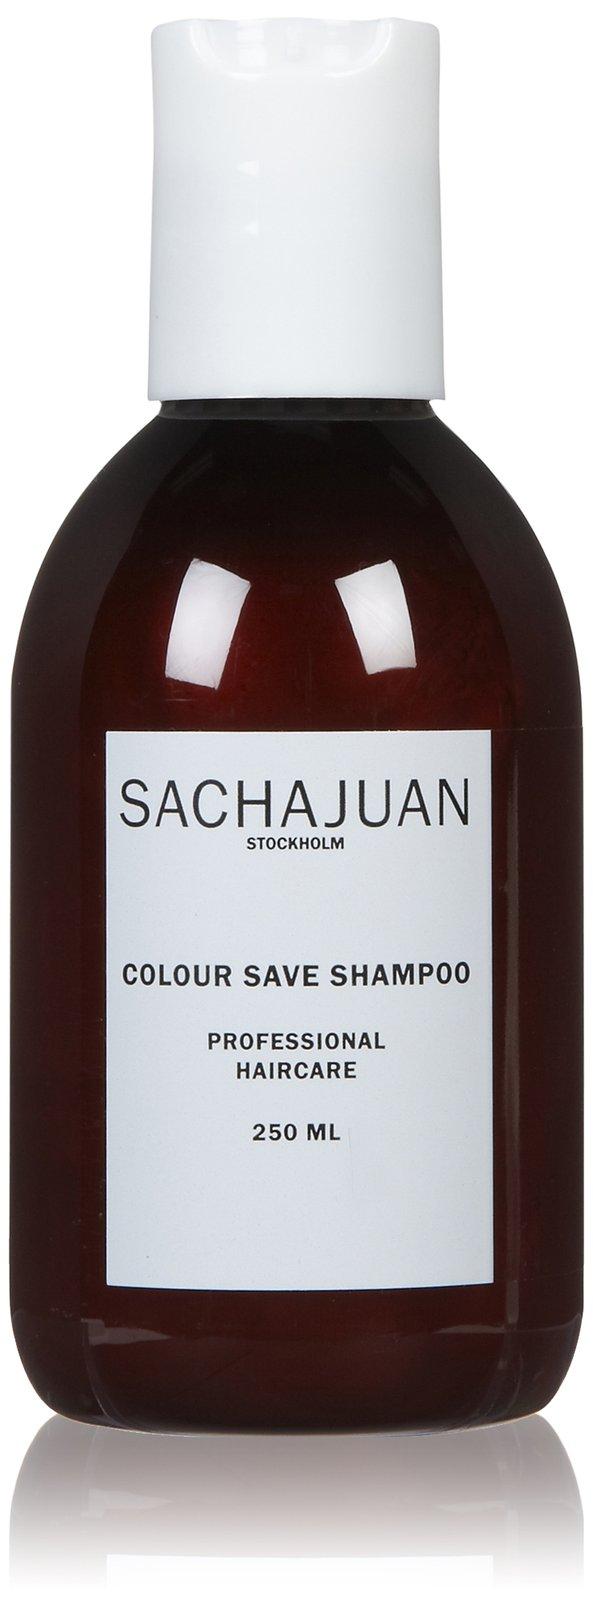 Sachajuan Color Save Shampoo